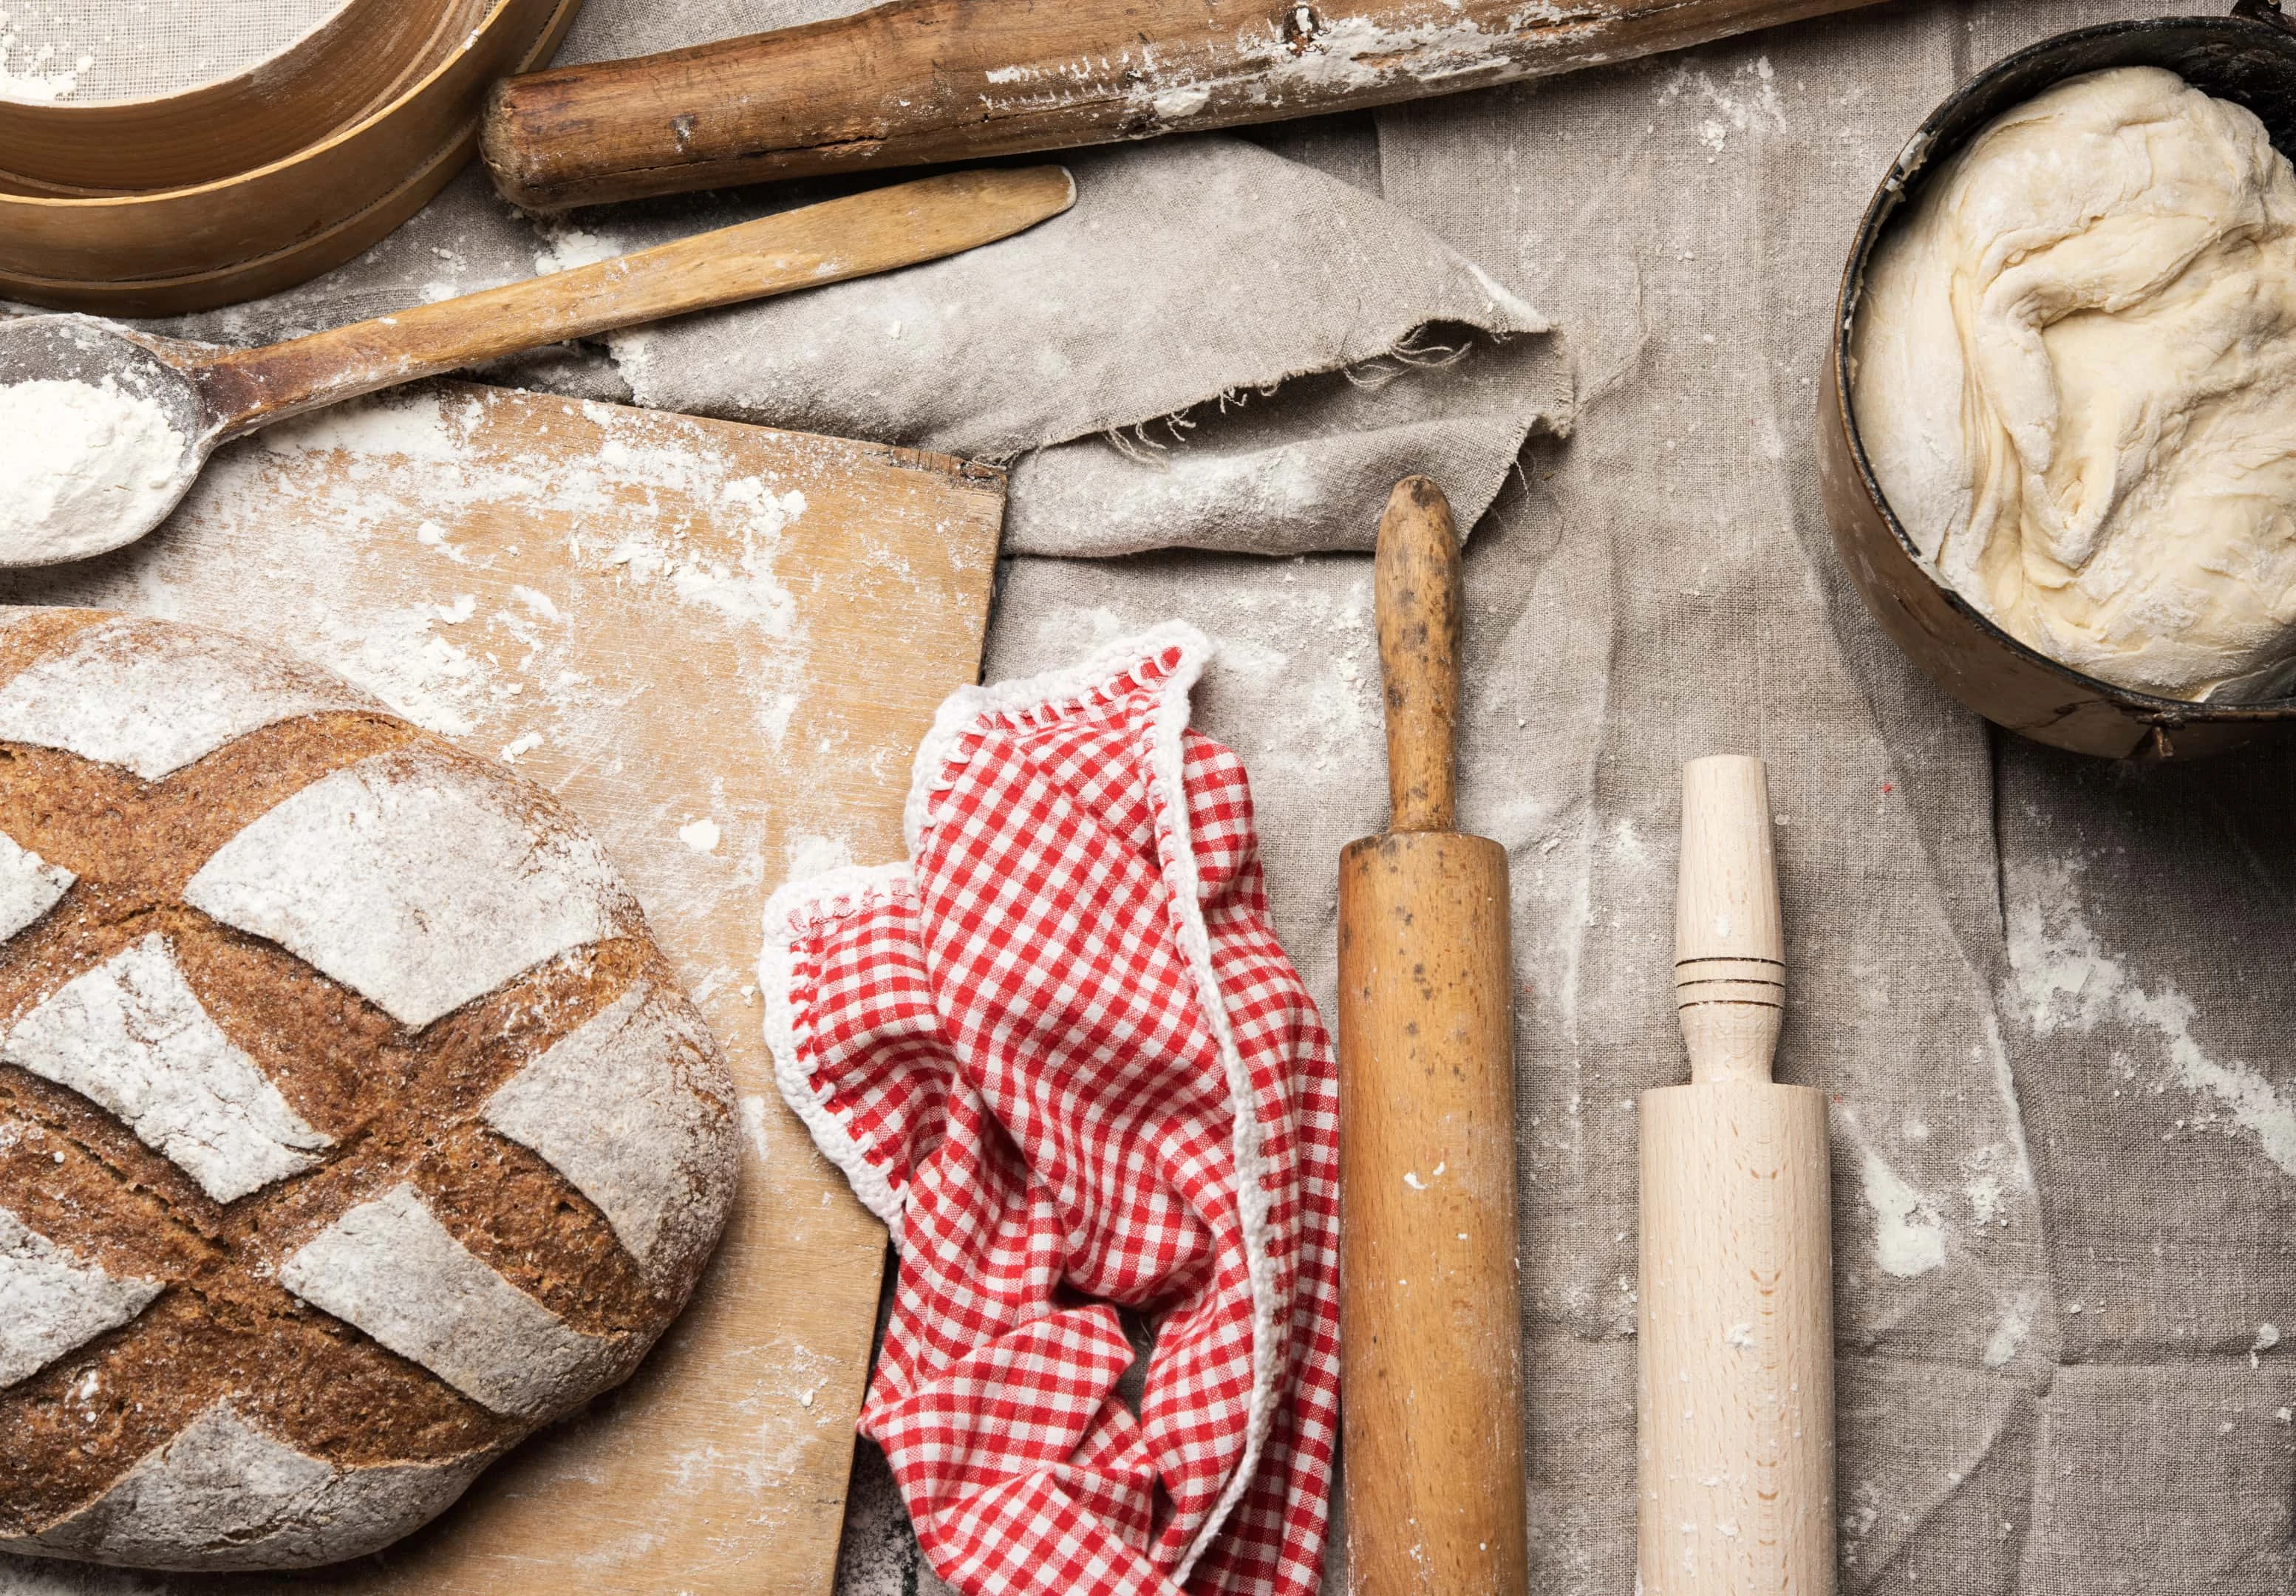 Bread lies on wooden board and yeast dough in metal bucket